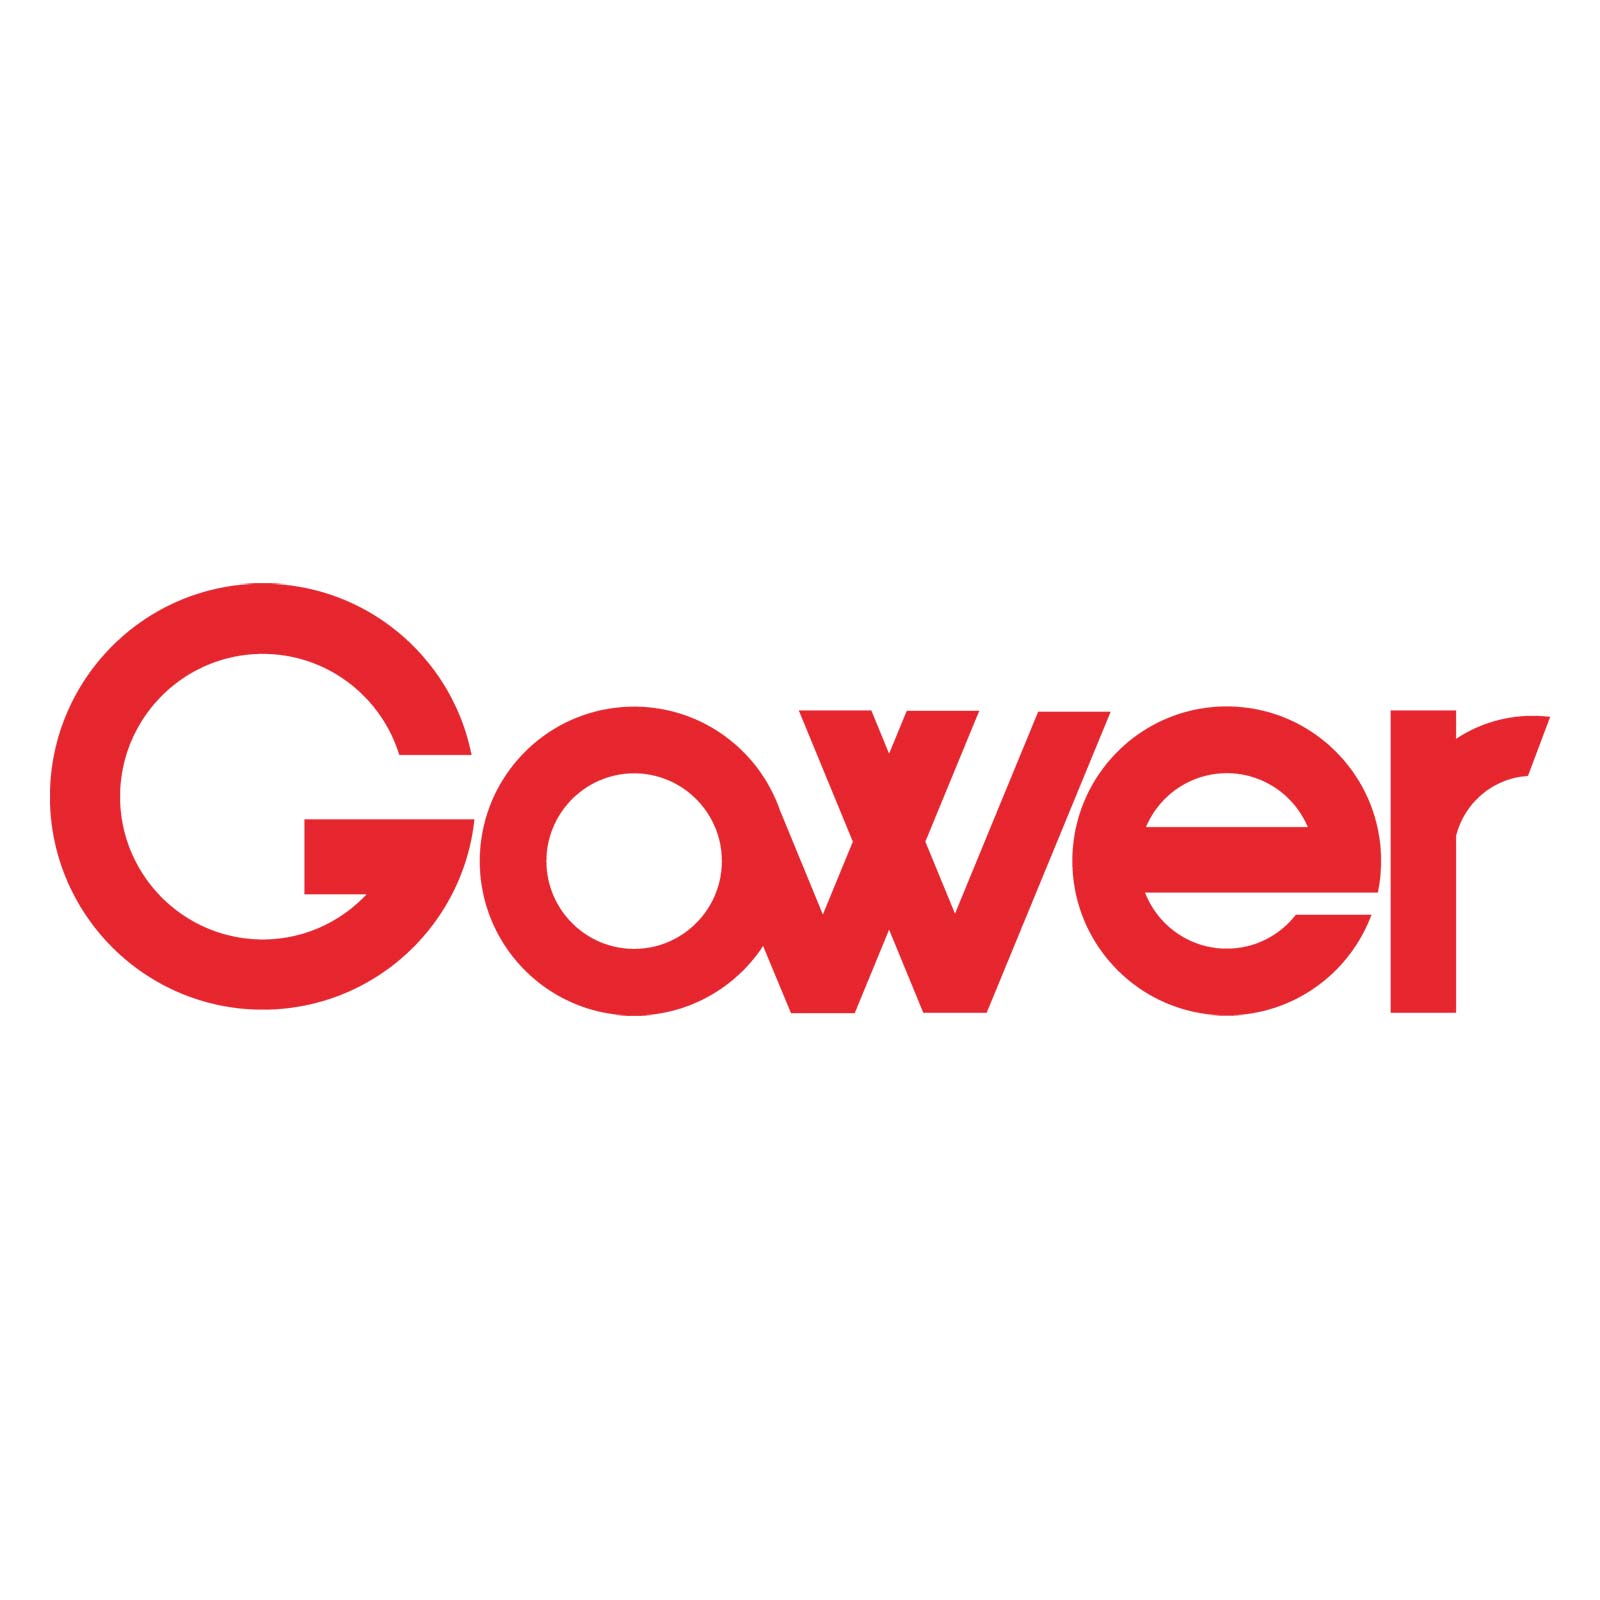 Gower